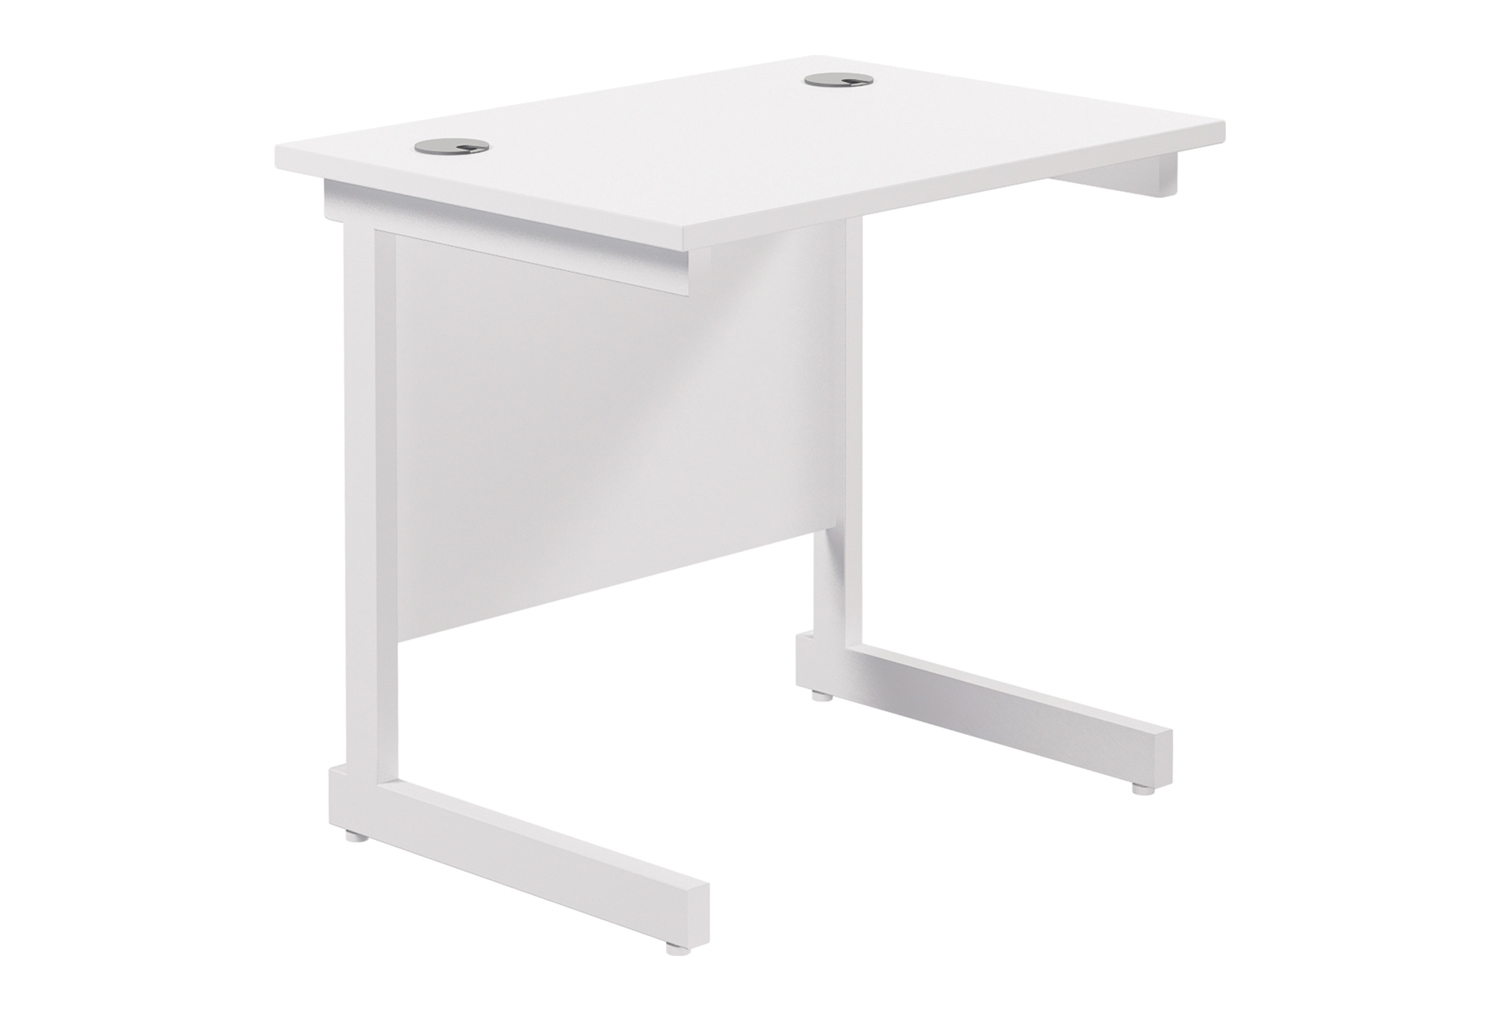 Proteus I Narrow Rectangular Office Desk, 80wx60dx73h (cm), White Frame, White